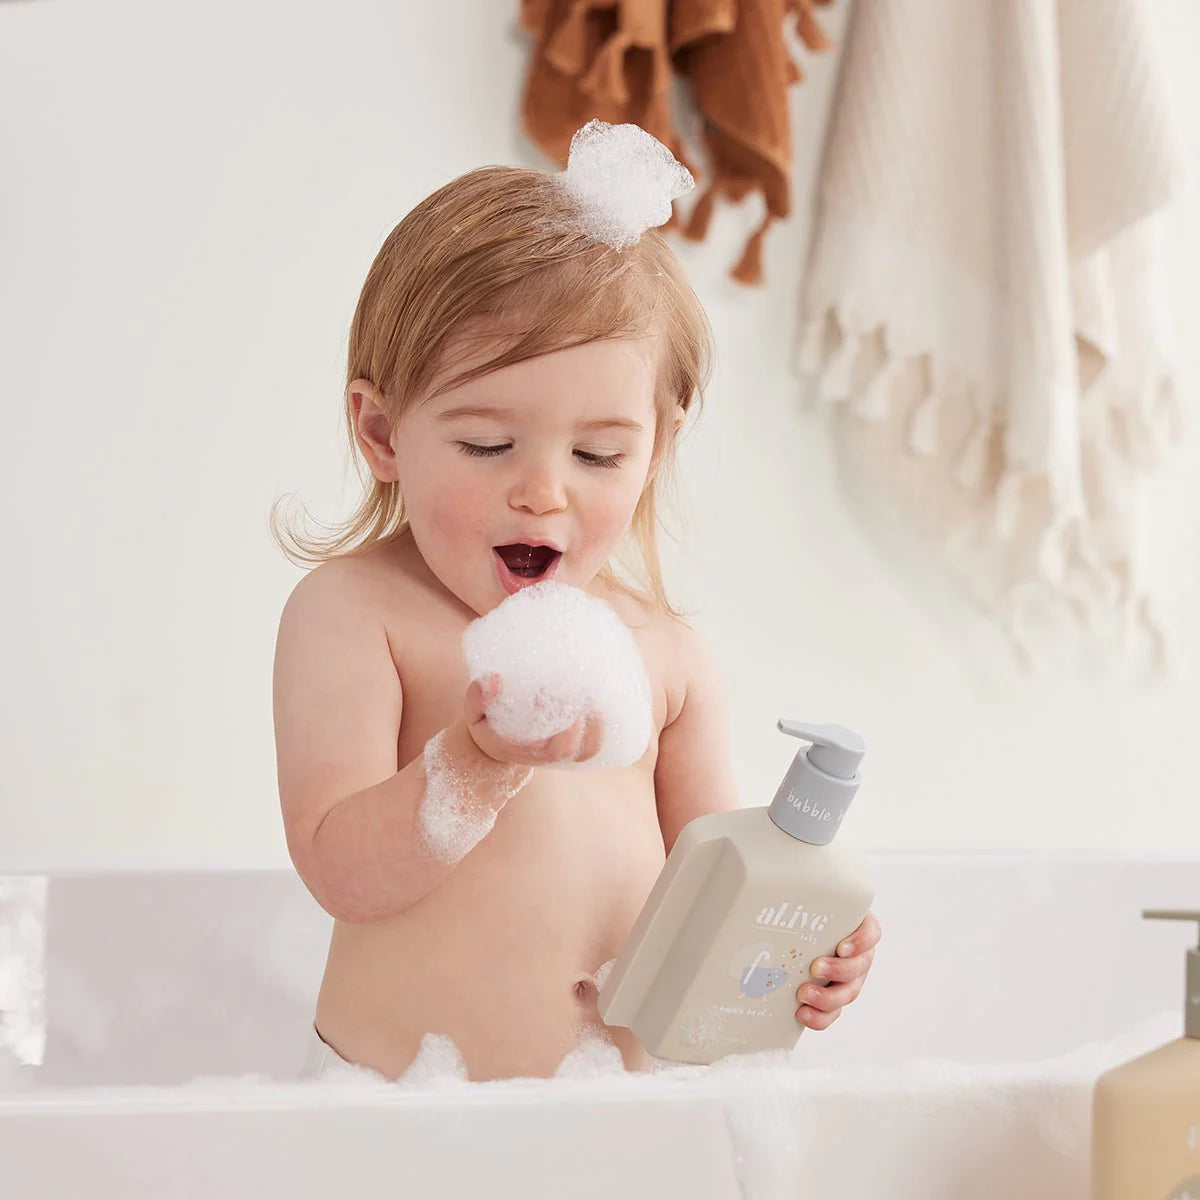 Al.ive baby - Apple Blossom Bubble Bath